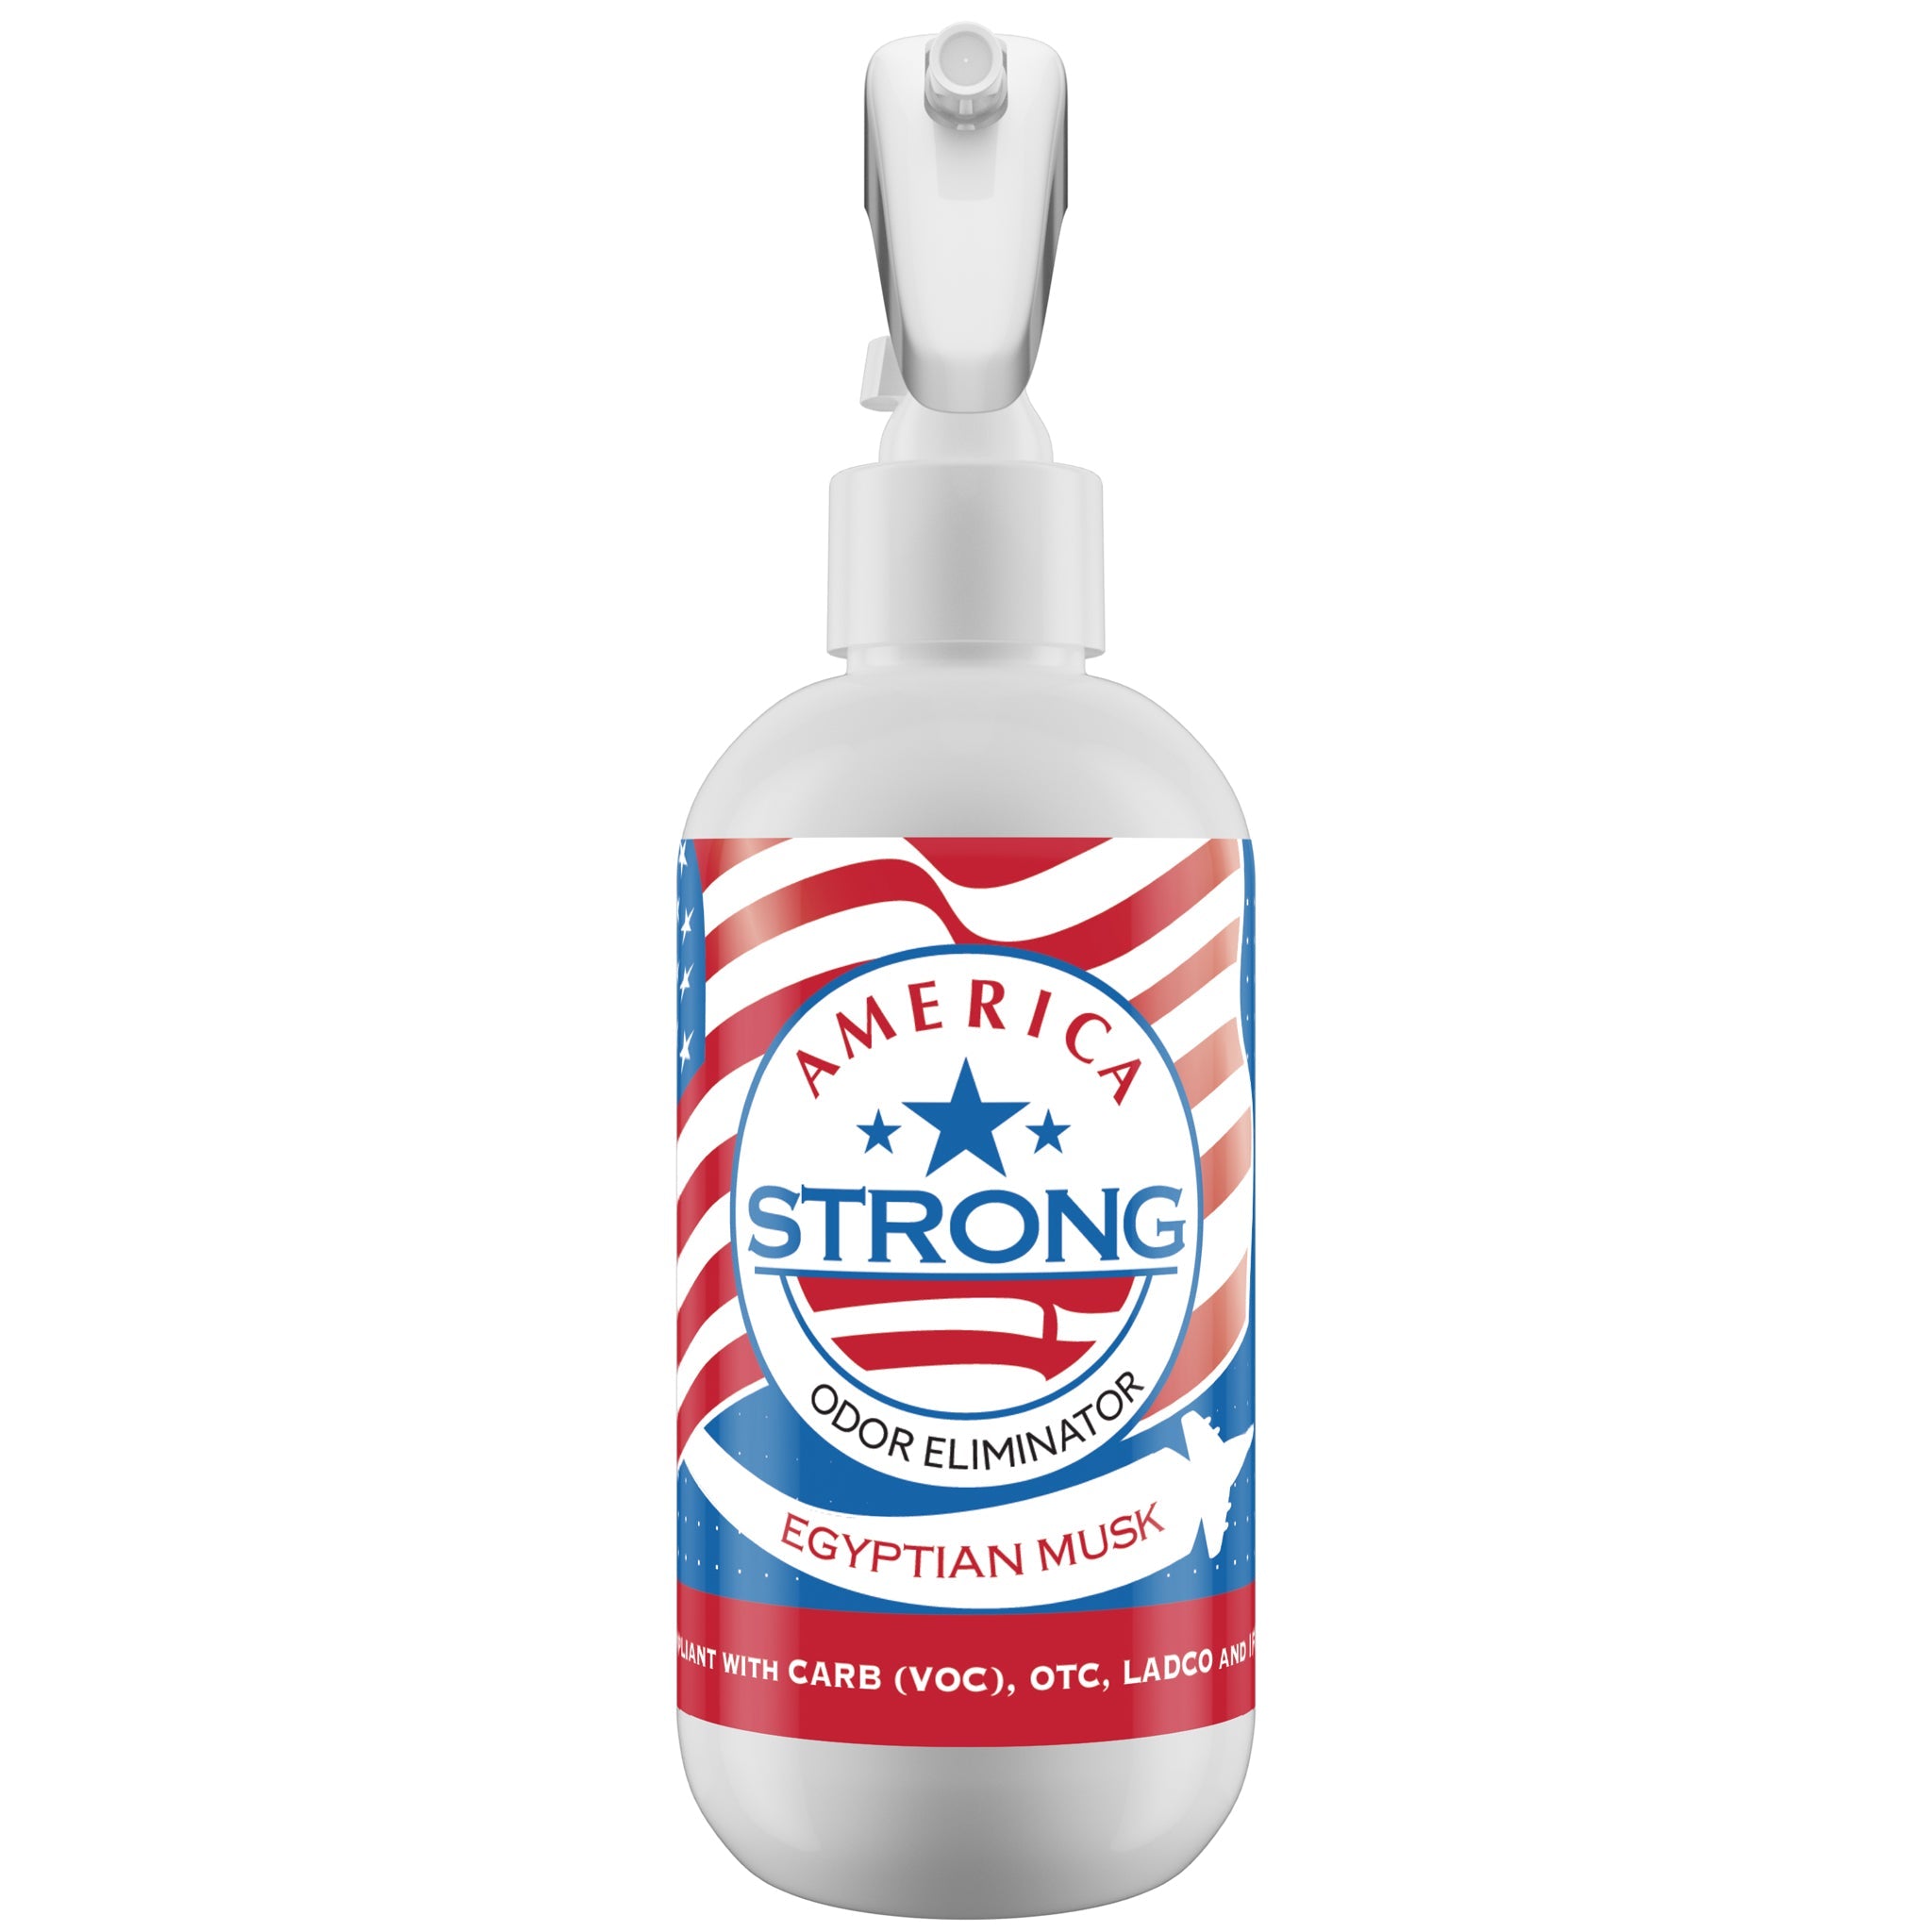 America Strong Odor Eliminator - Egyptian Musk Scent Size: 8.0oz